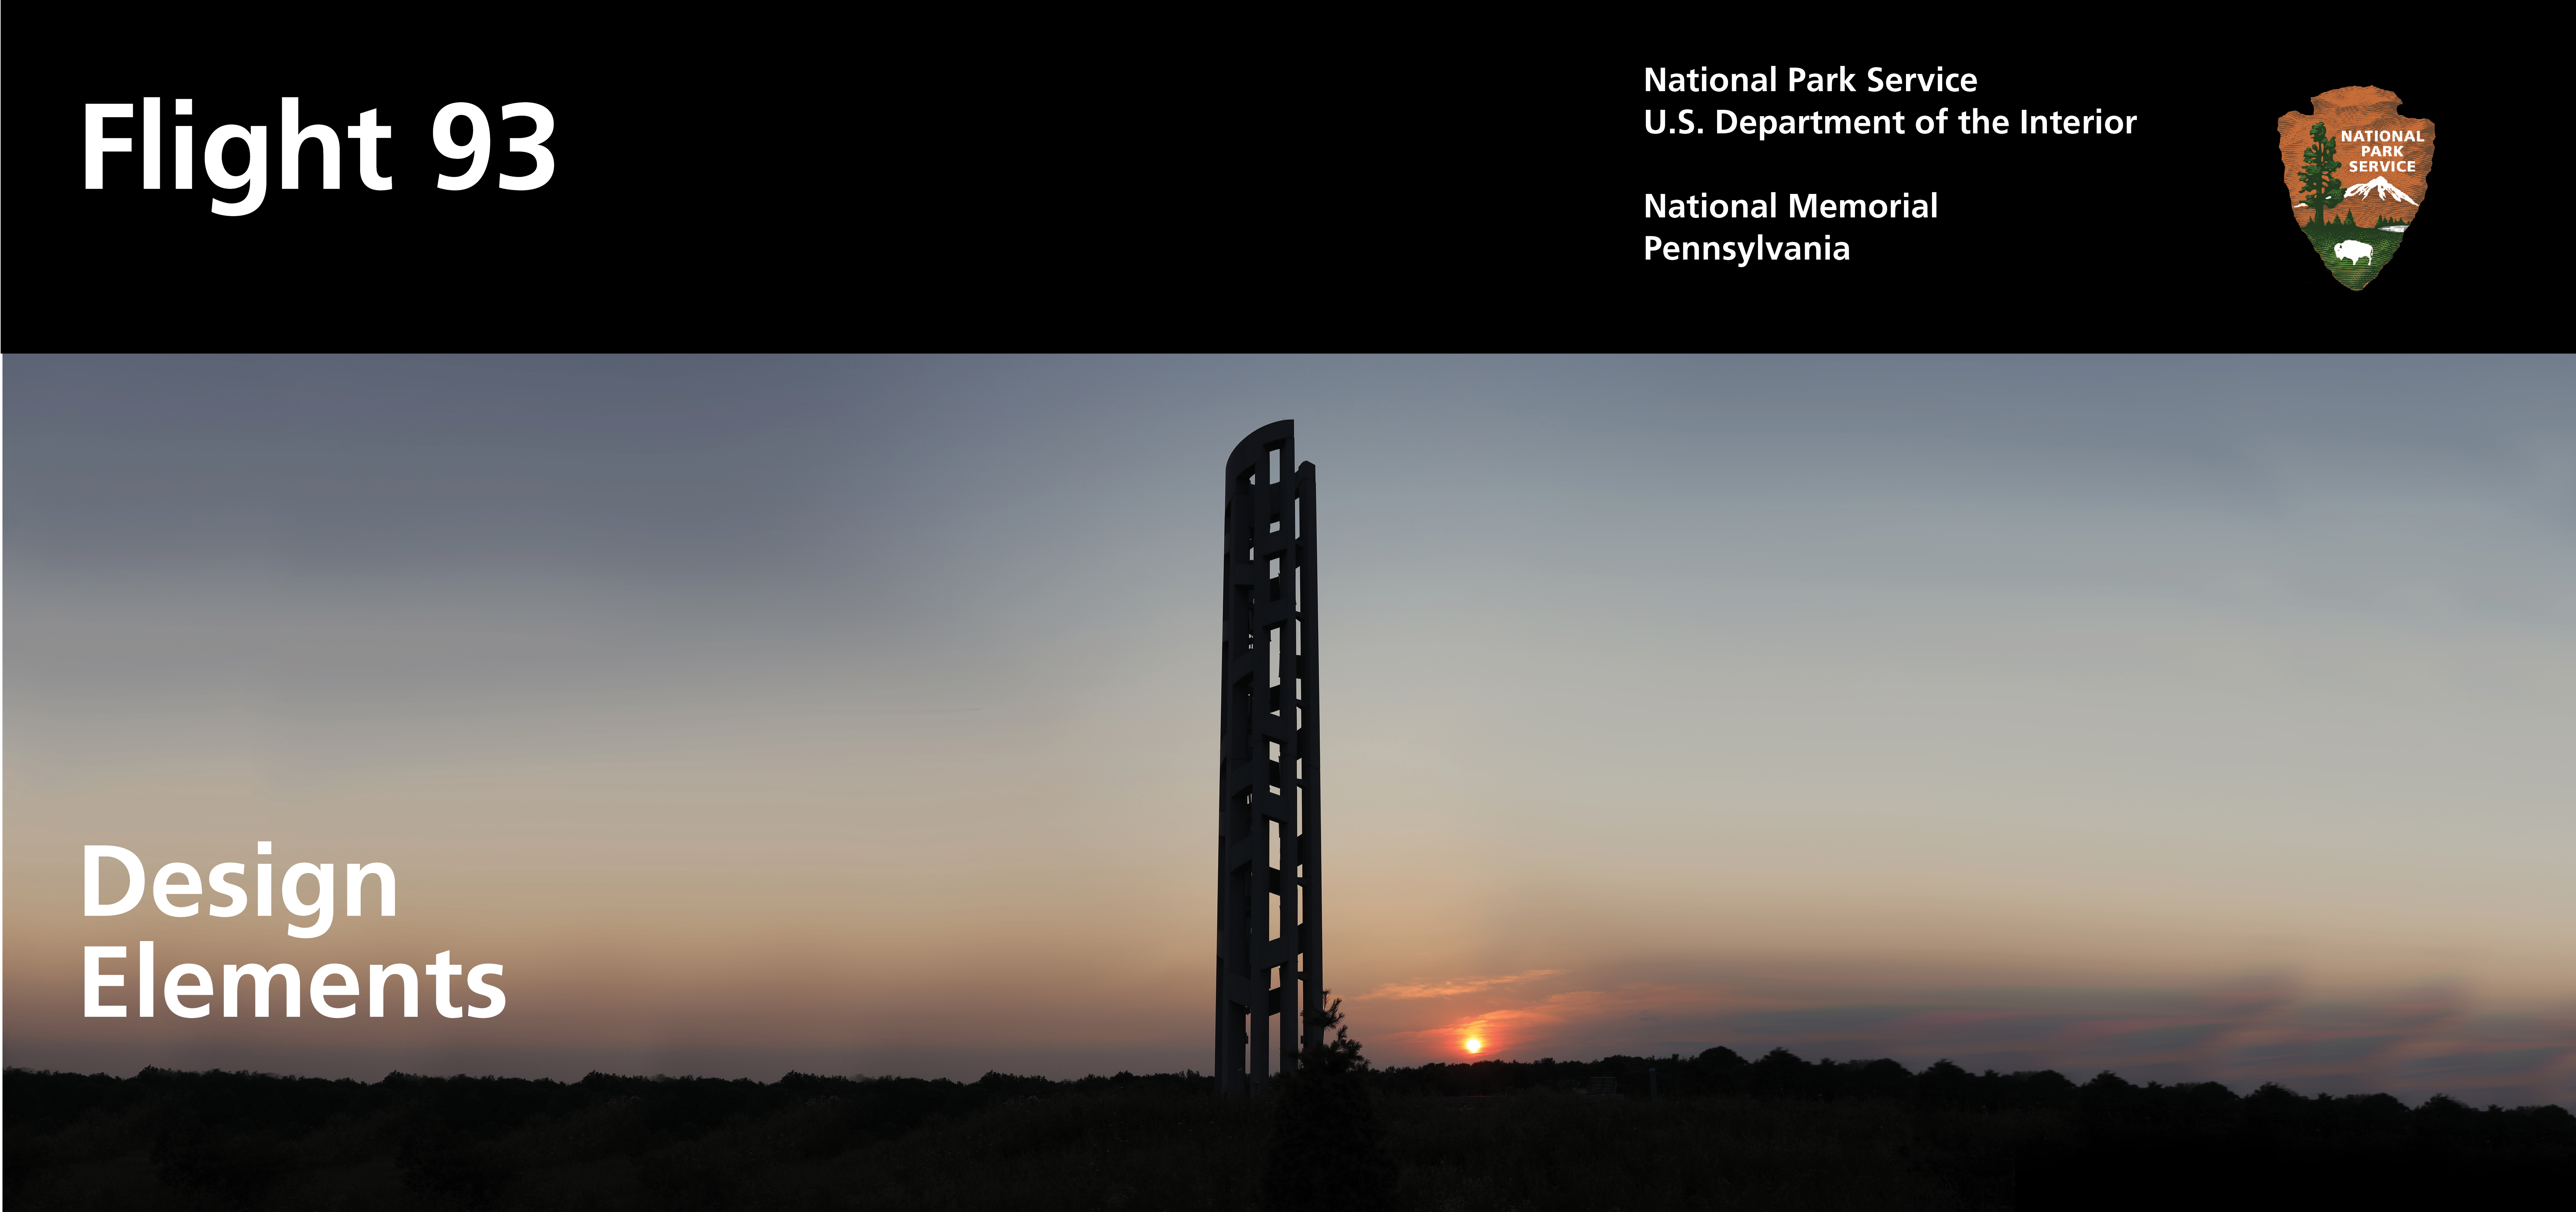 Design Elements - Flight 93 National Memorial (U.S. National Park